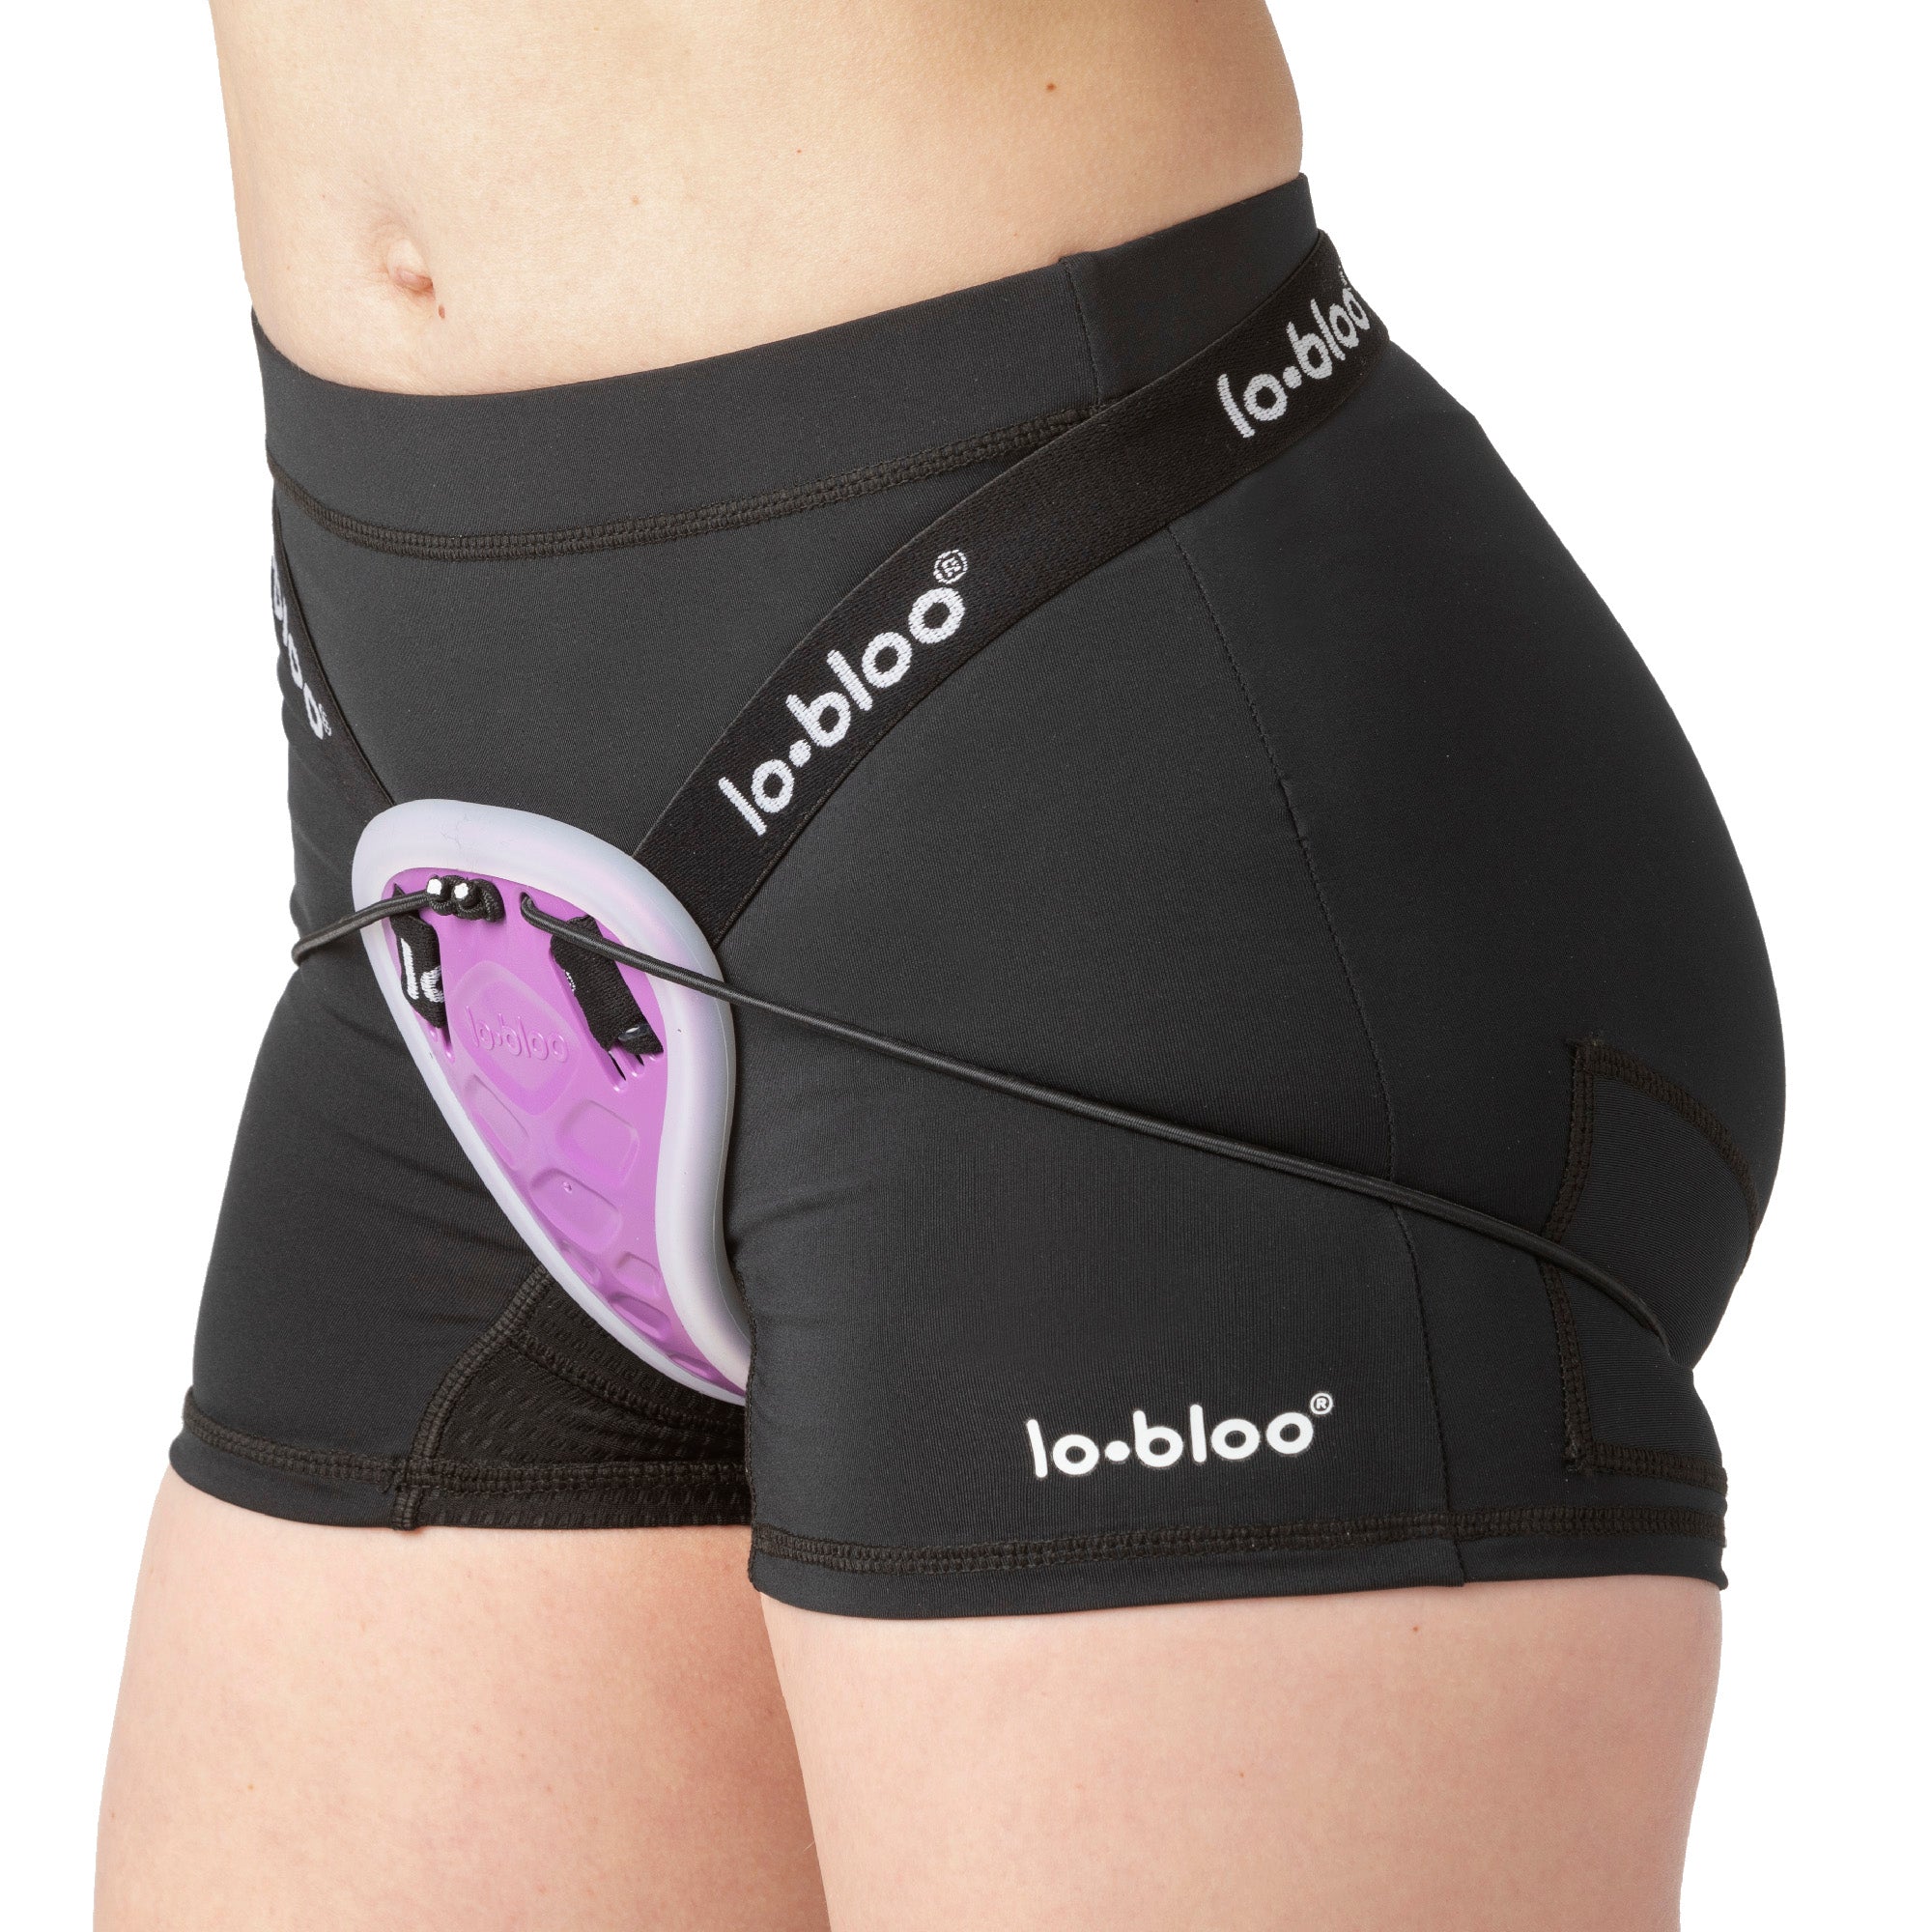 lobloo® AEROSLIM pelvic protection